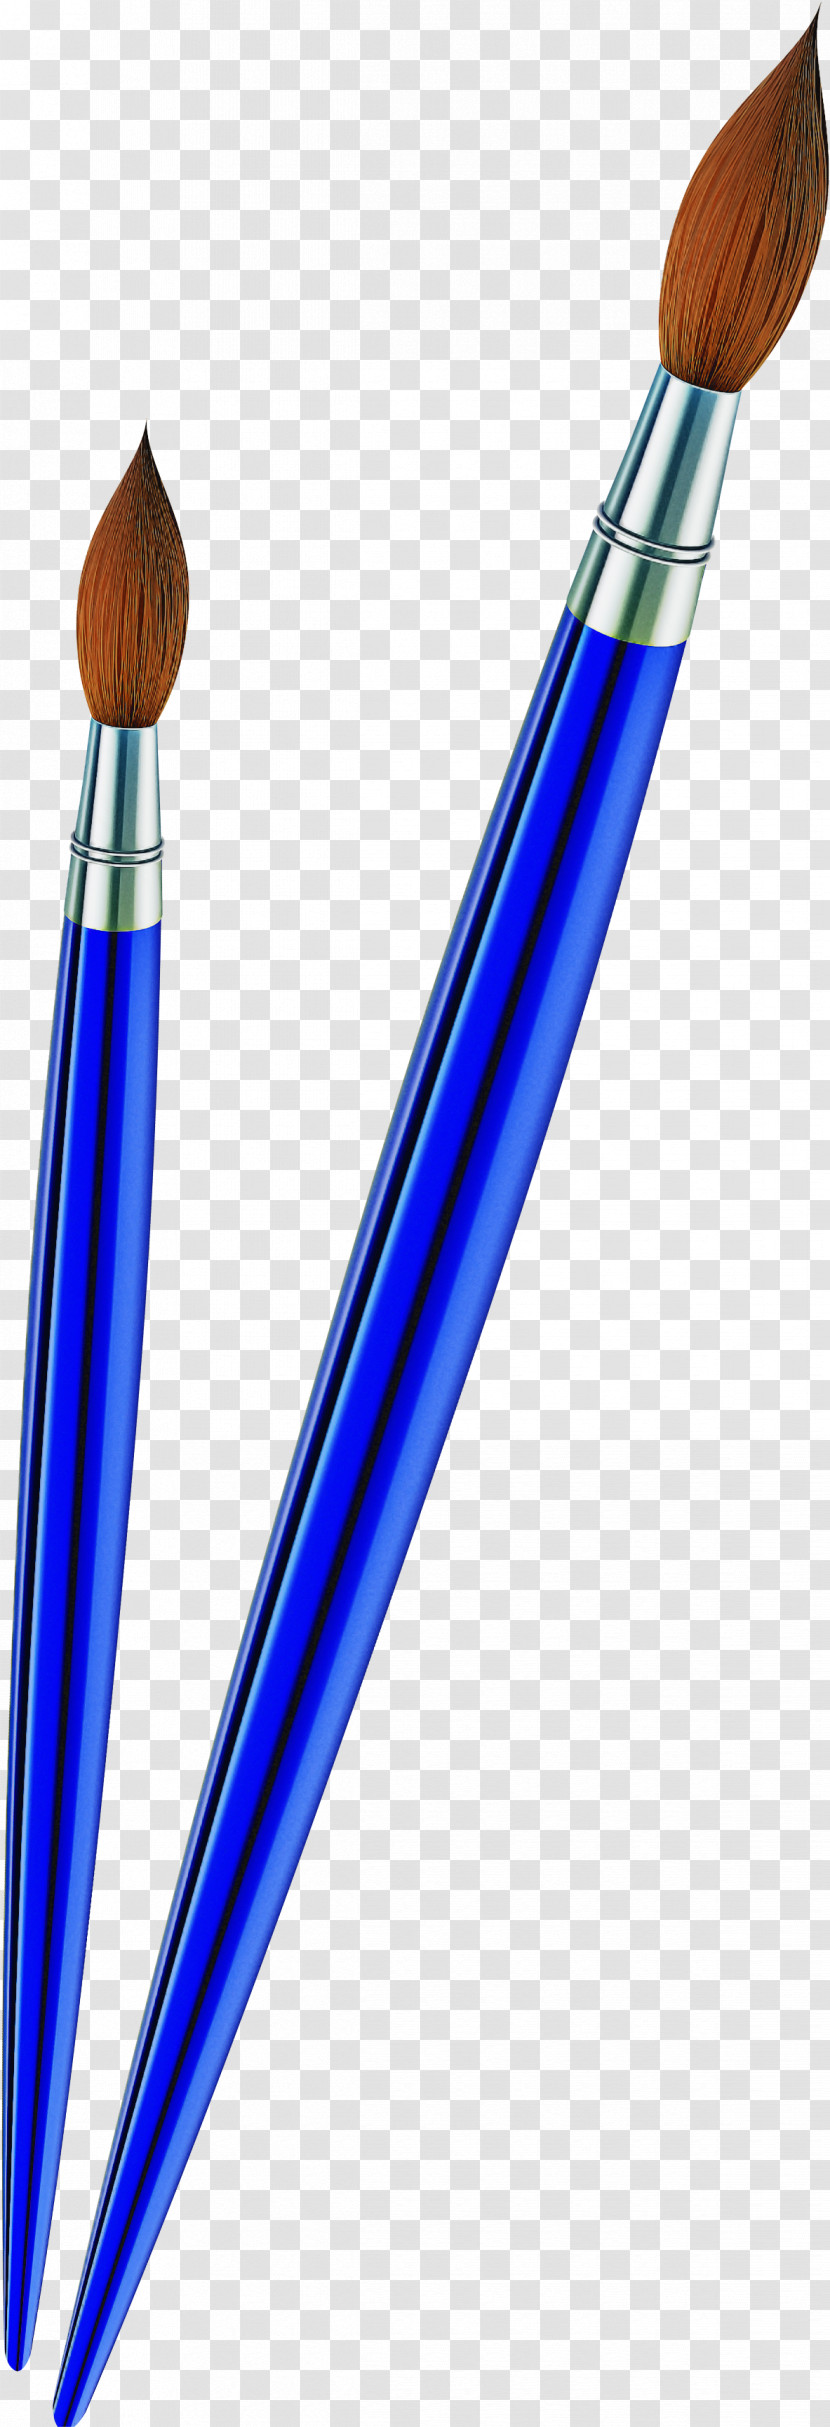 Brush Ball Pen Electric Blue Writing Implement Pen Transparent PNG